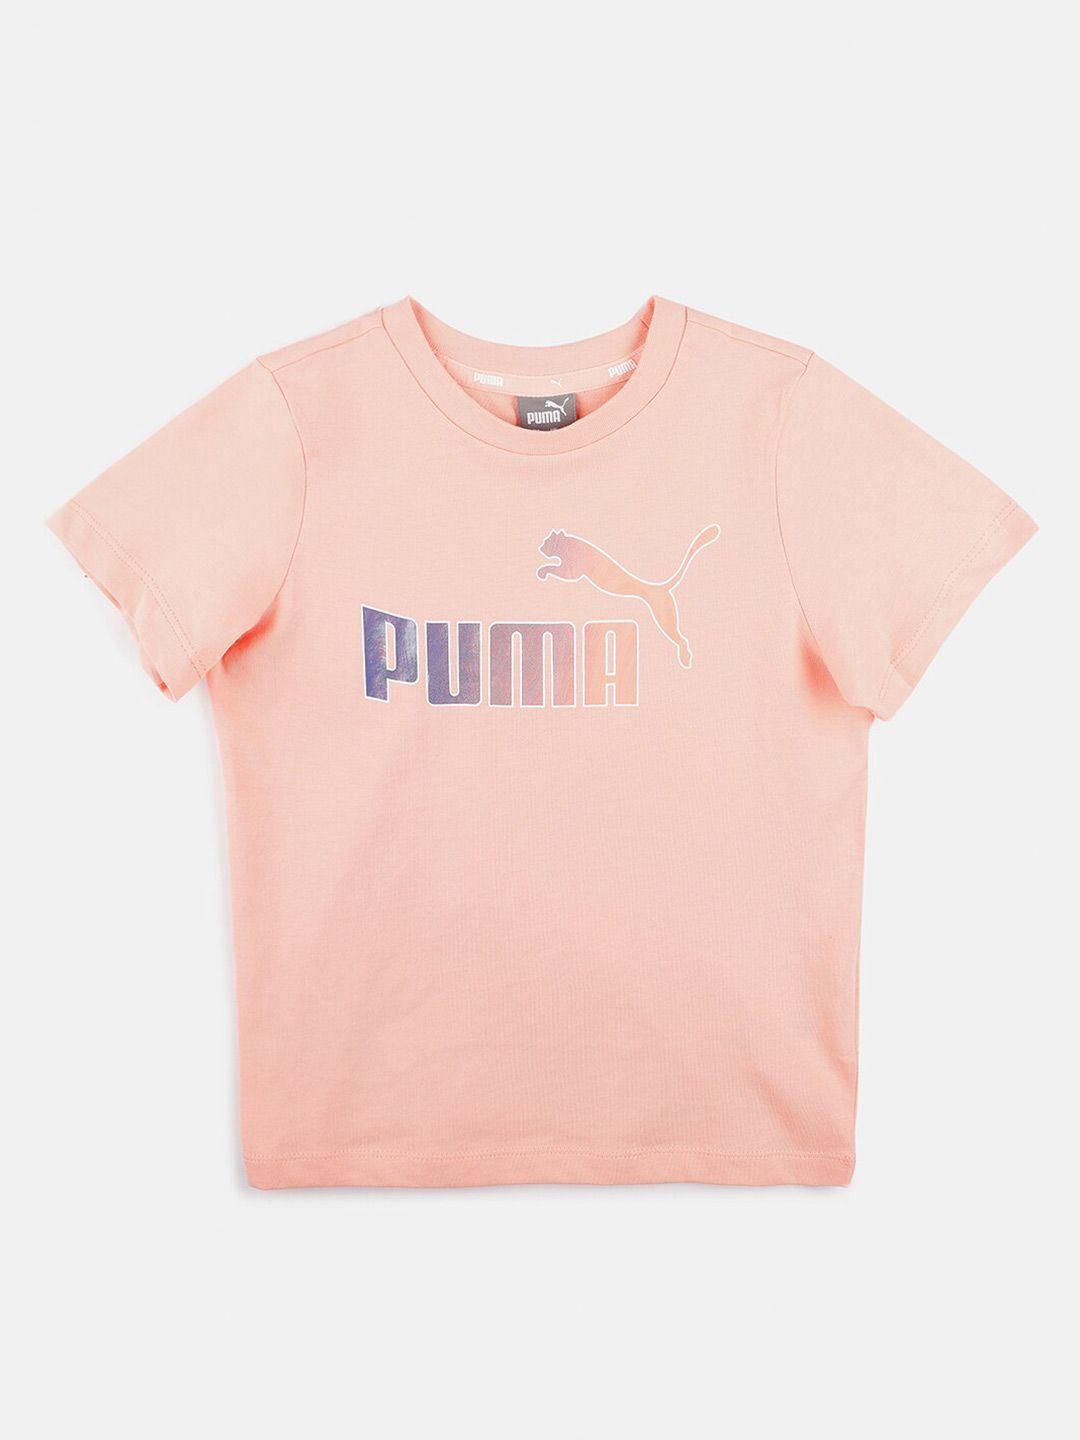 puma kids pink & peach-coloured printed t-shirt with shorts